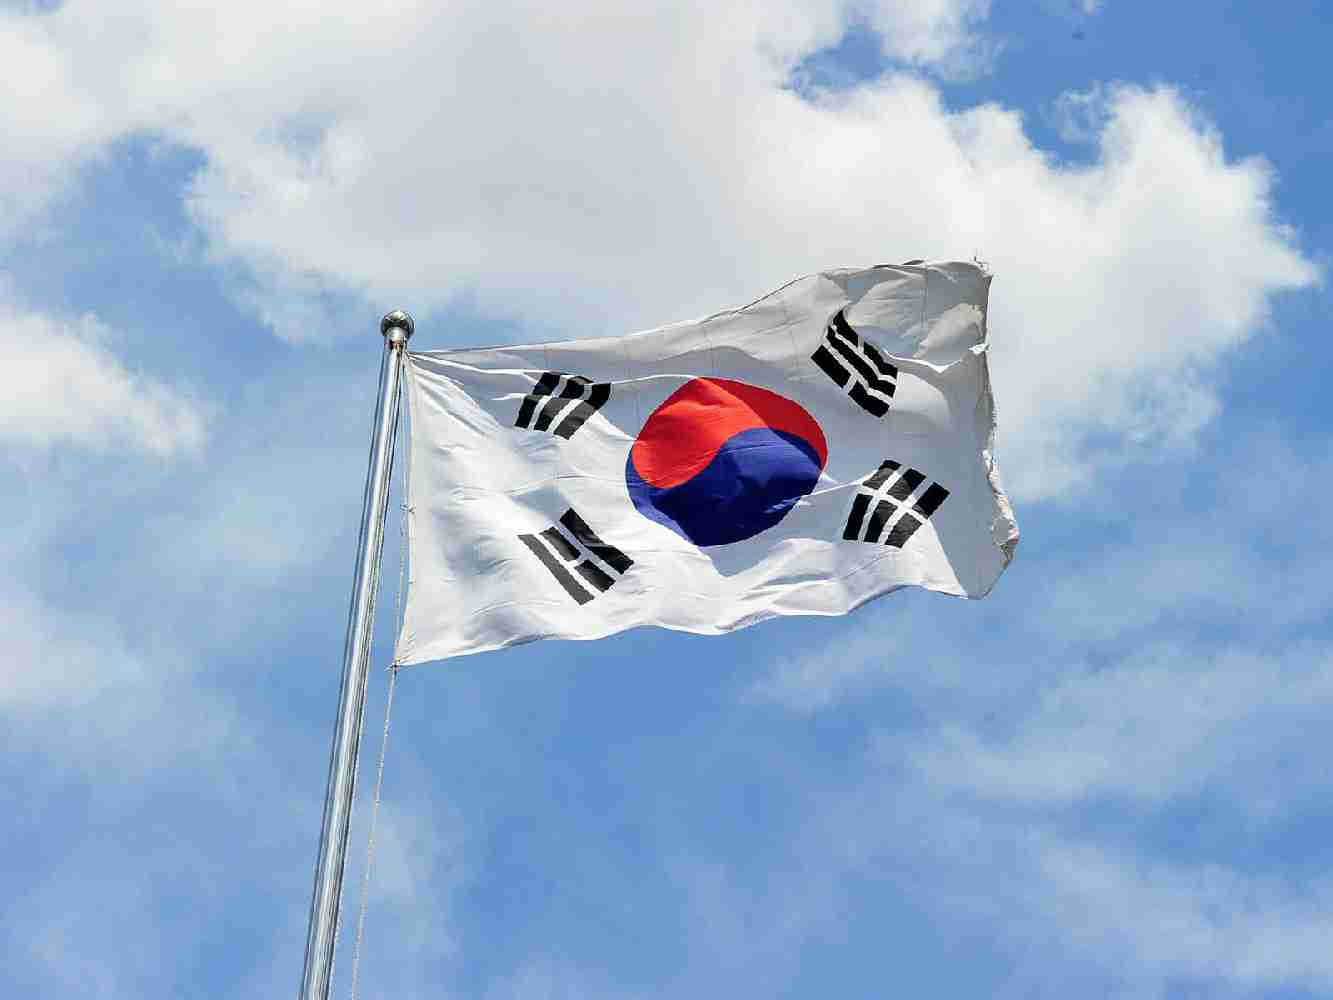 Envío desde China a Corea: aéreo, marítimo y expreso